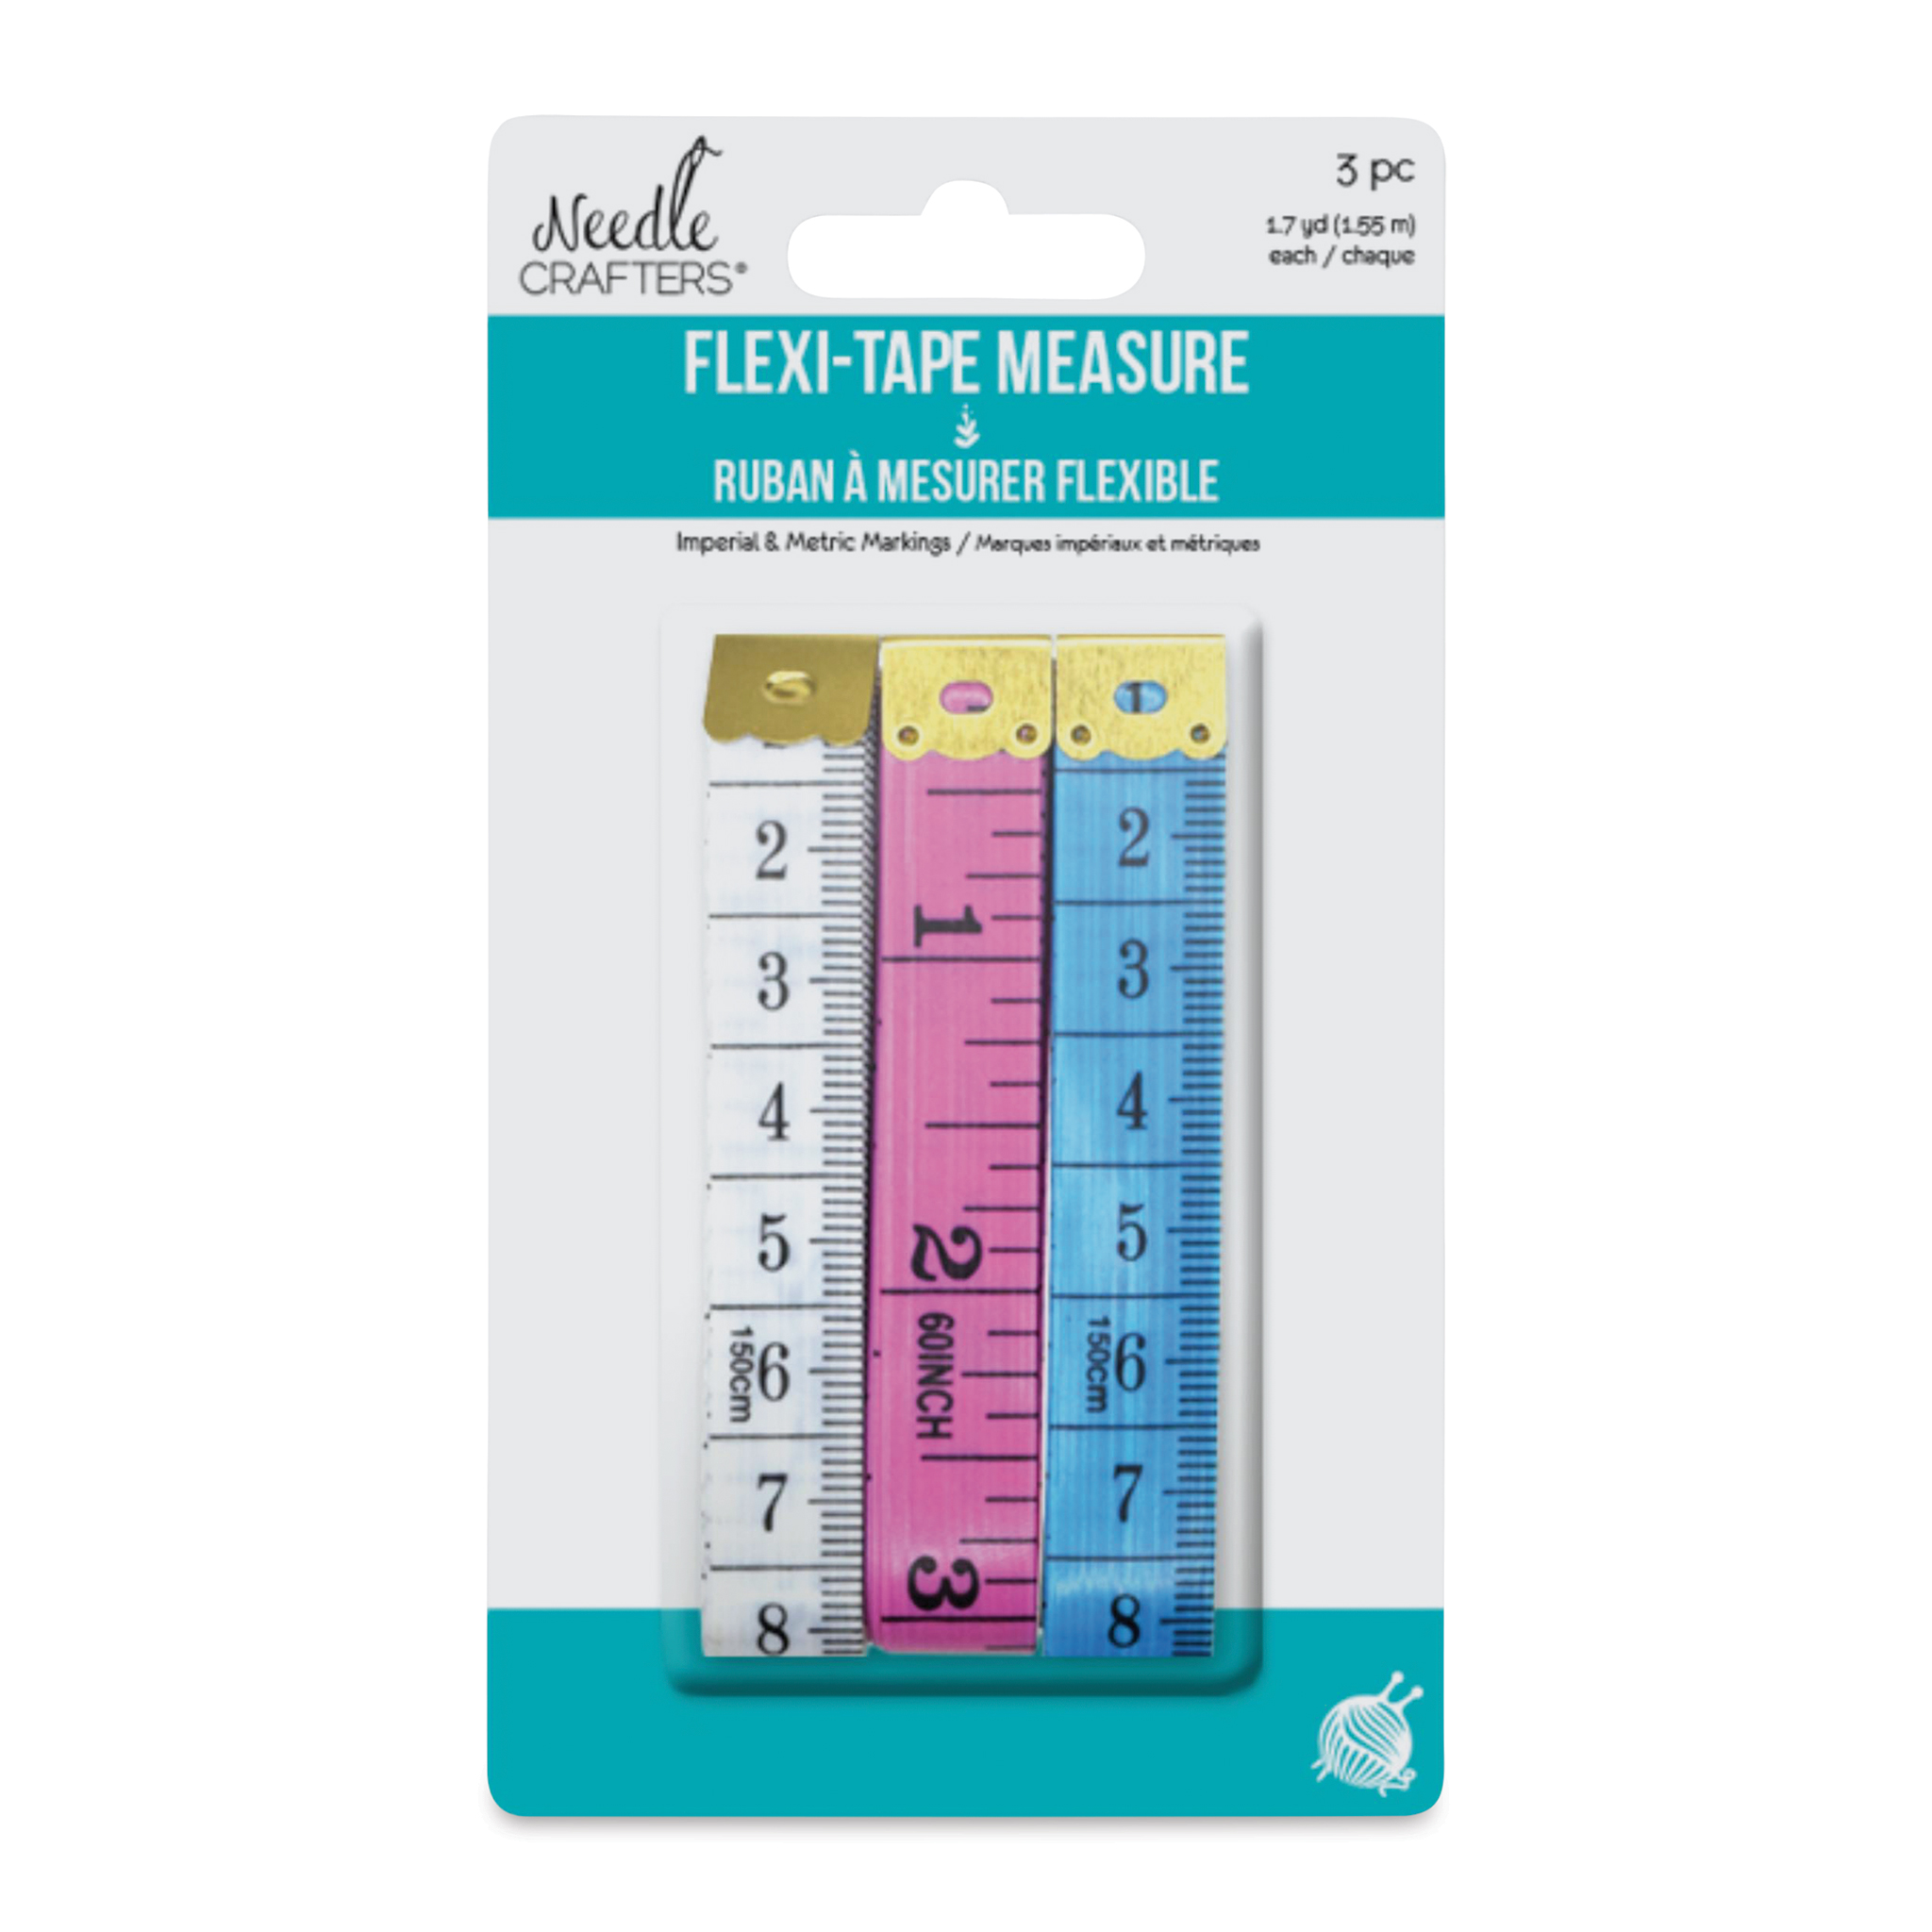 Needle Crafters Flexi-Tape Measure Set